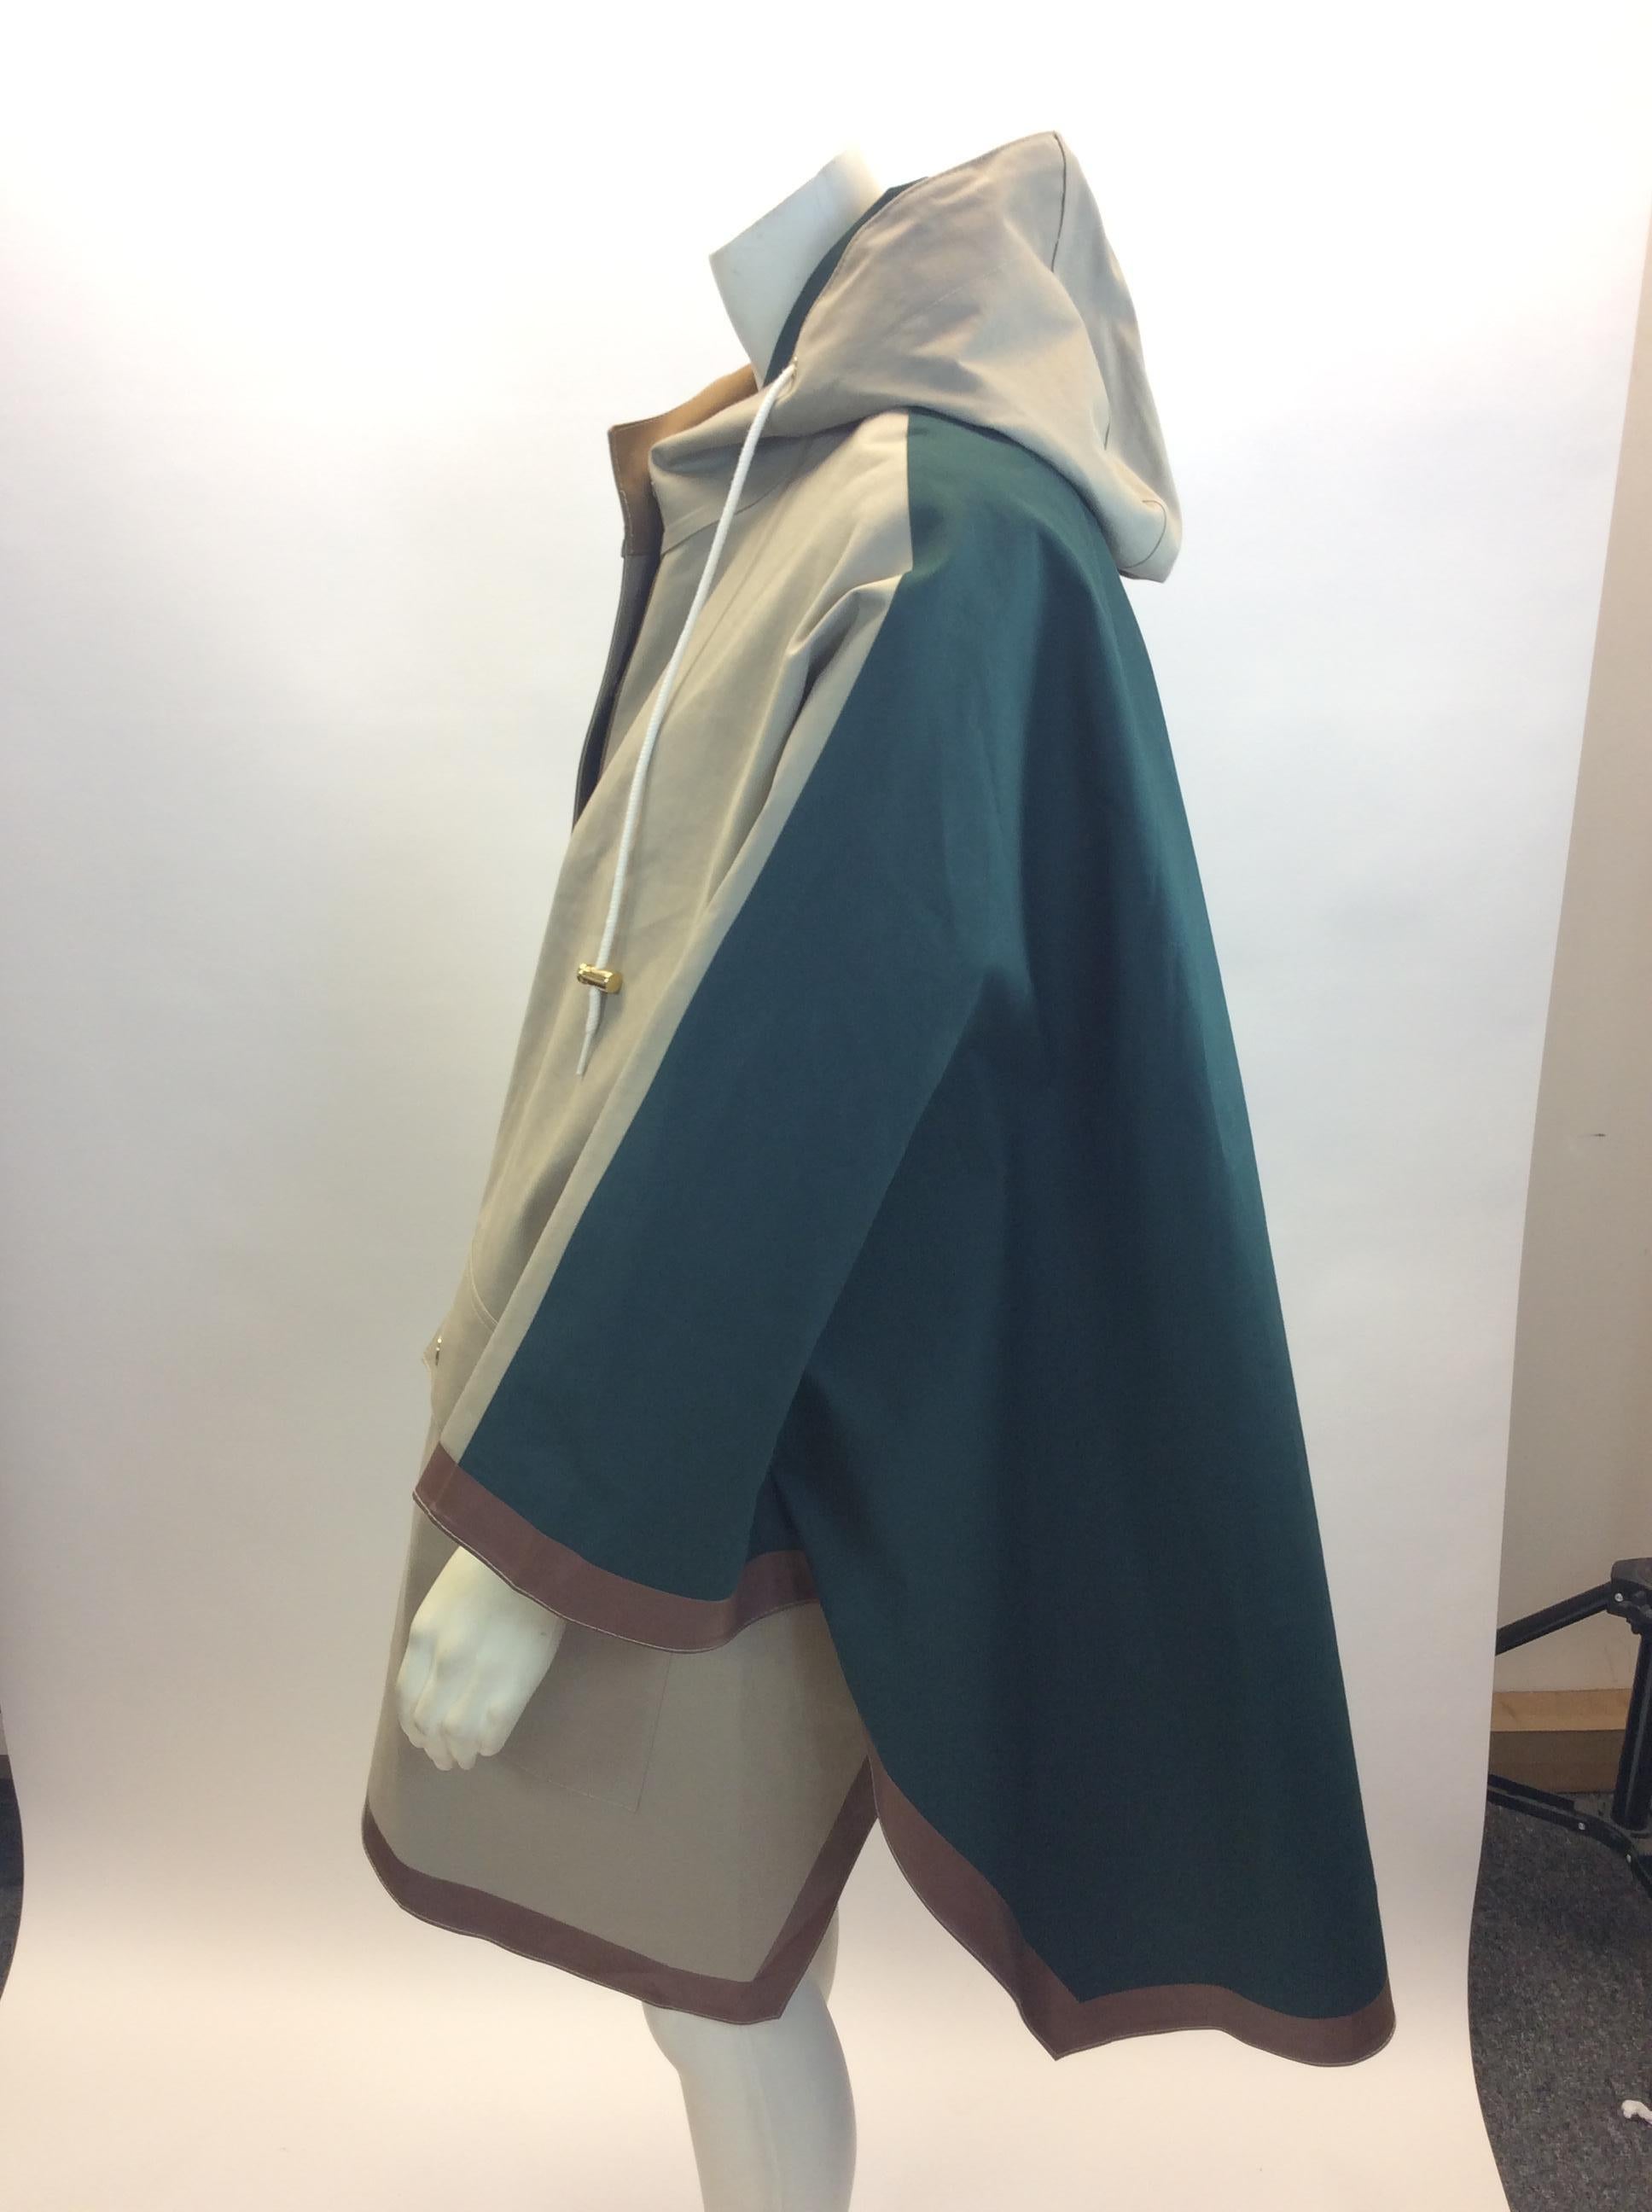 Mackintosh Tan Raincoat NWT
$650
Made in Scotland 
100% Cotton
Size 6
Length 34.5